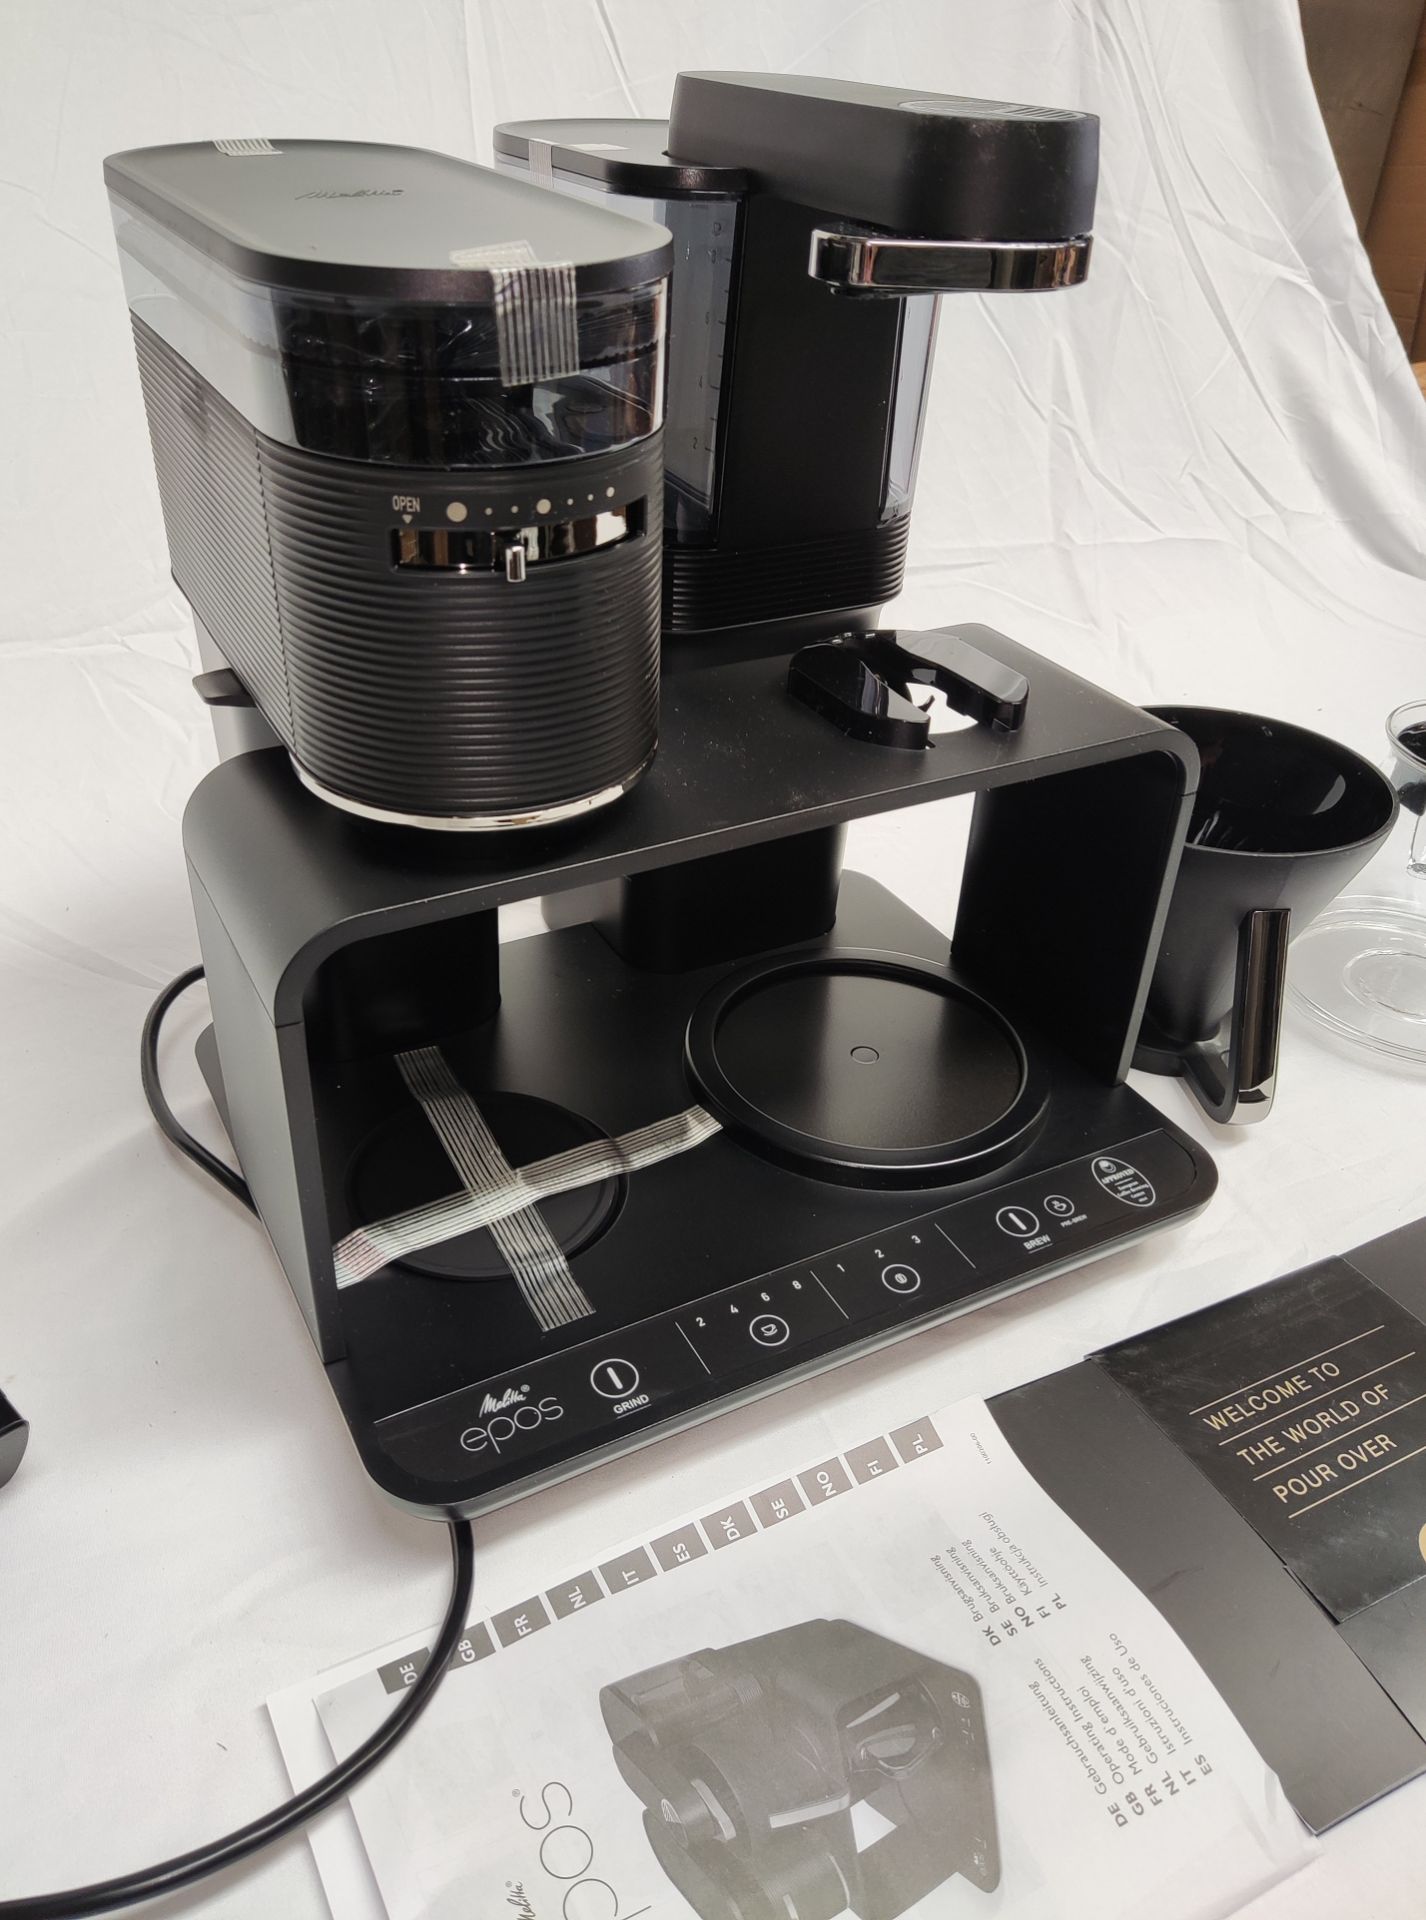 1 x MELITTA Epos Coffee Machine With Grinder - Boxed - Original RRP £399 - Ref: 7129012/HJL350/C19/ - Image 3 of 14